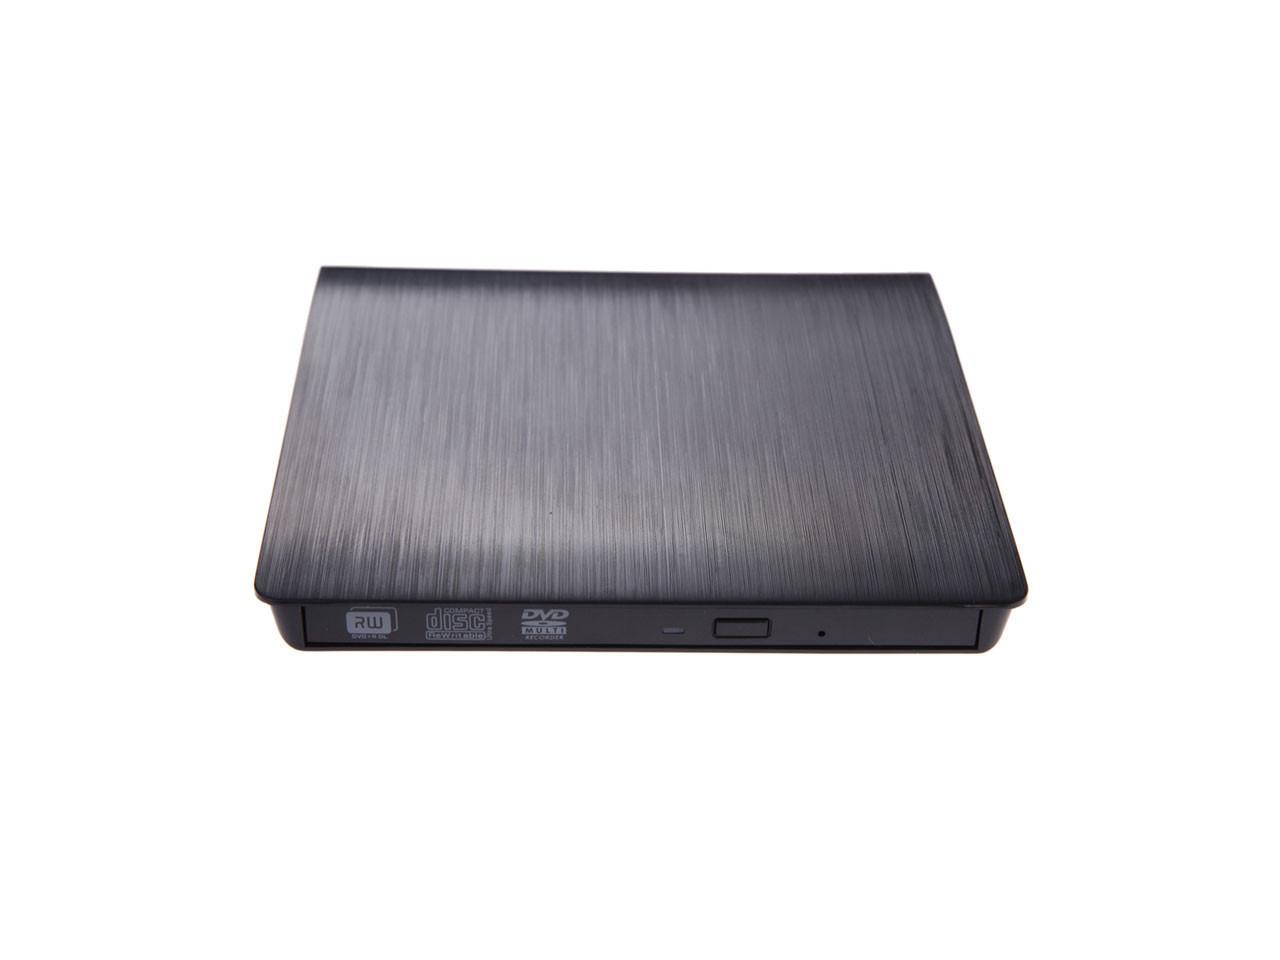 9.5mm Laptop Optical Drive Case,Slim USB 3.0 DVD External Enclosure ...